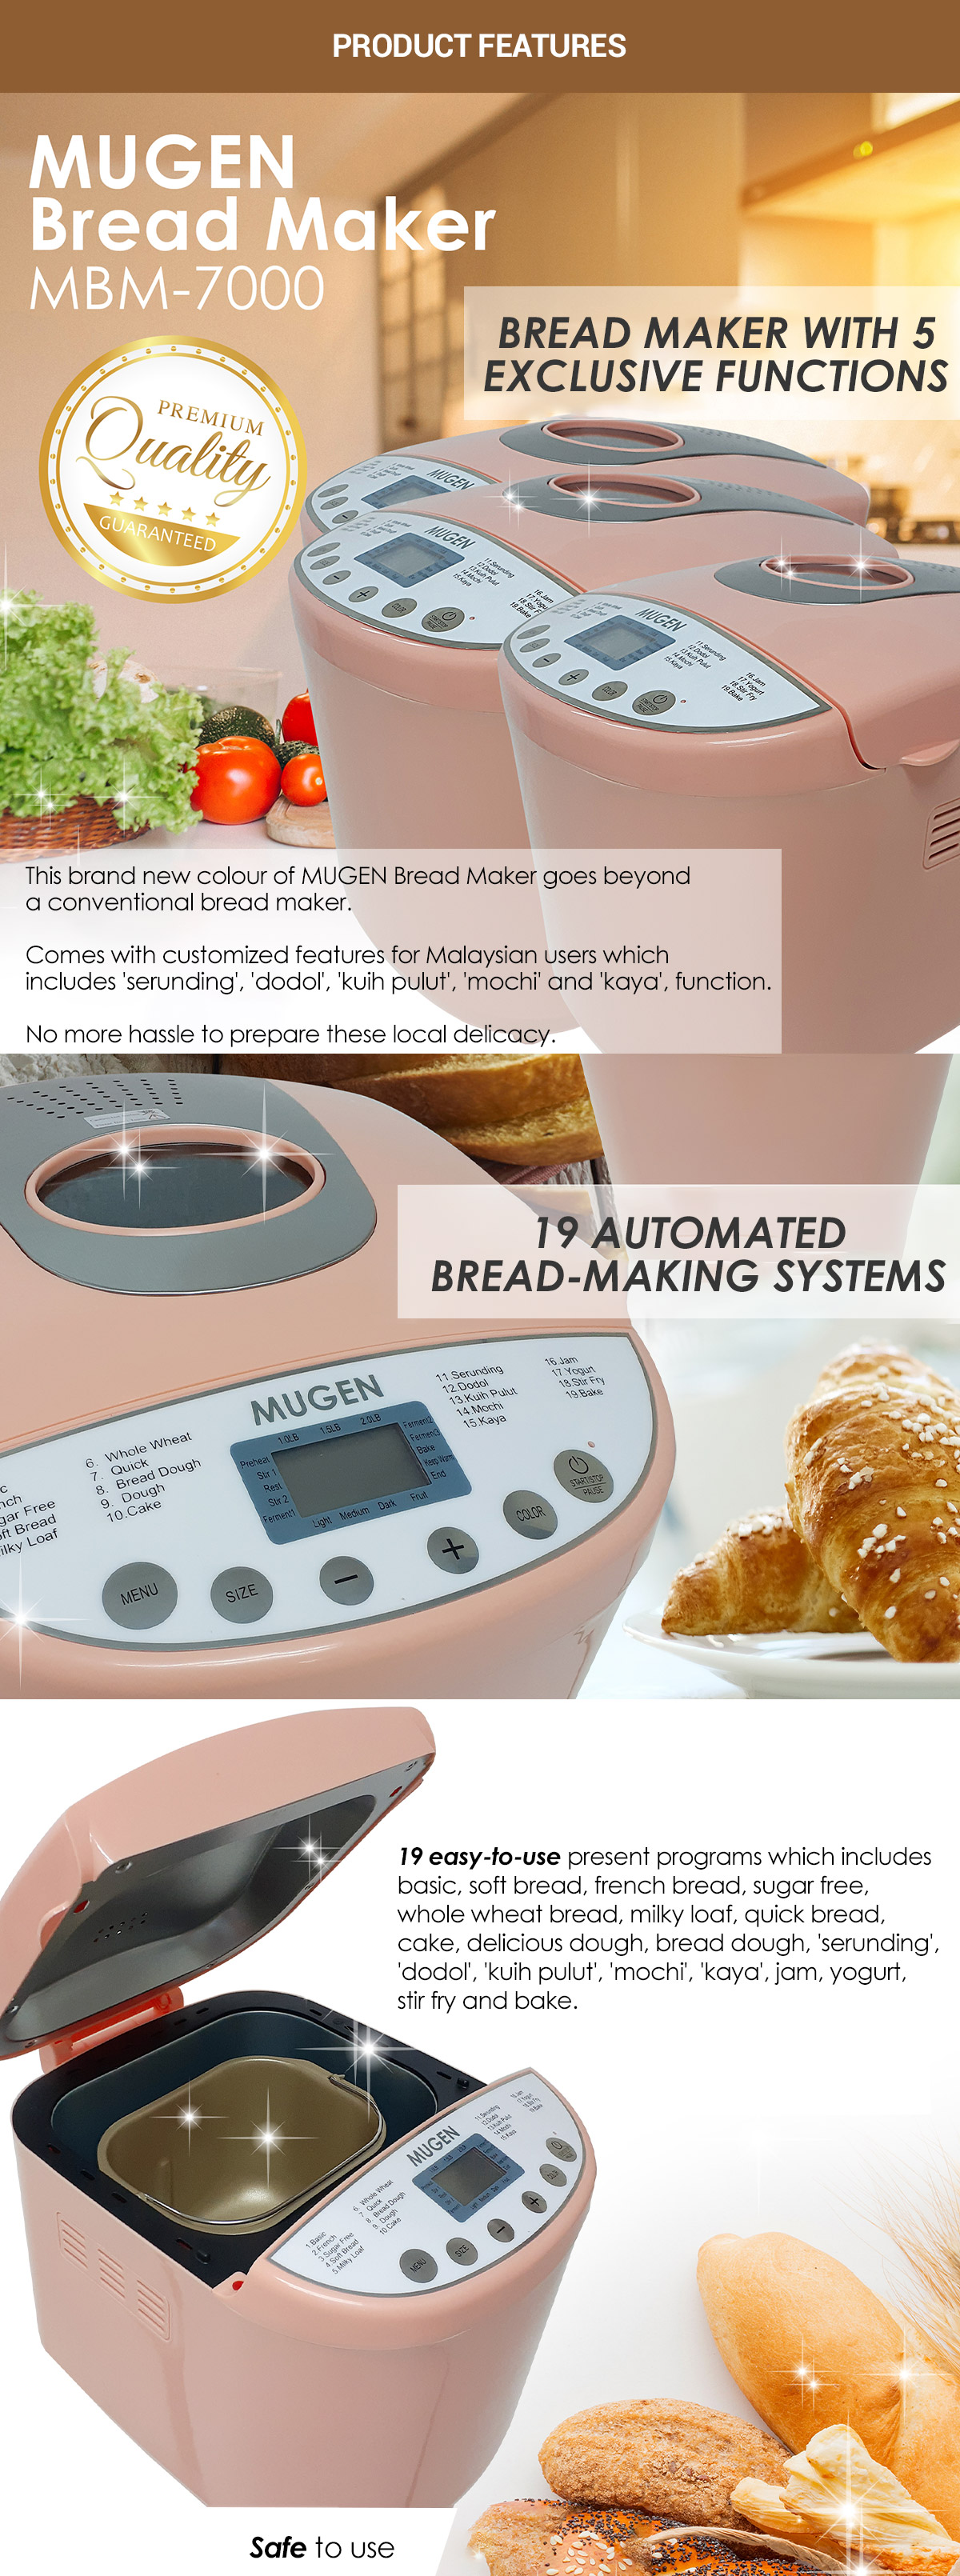 Resepi Roti Guna Breadmaker / Resepi Roti Putih Guna Bread Maker Yang